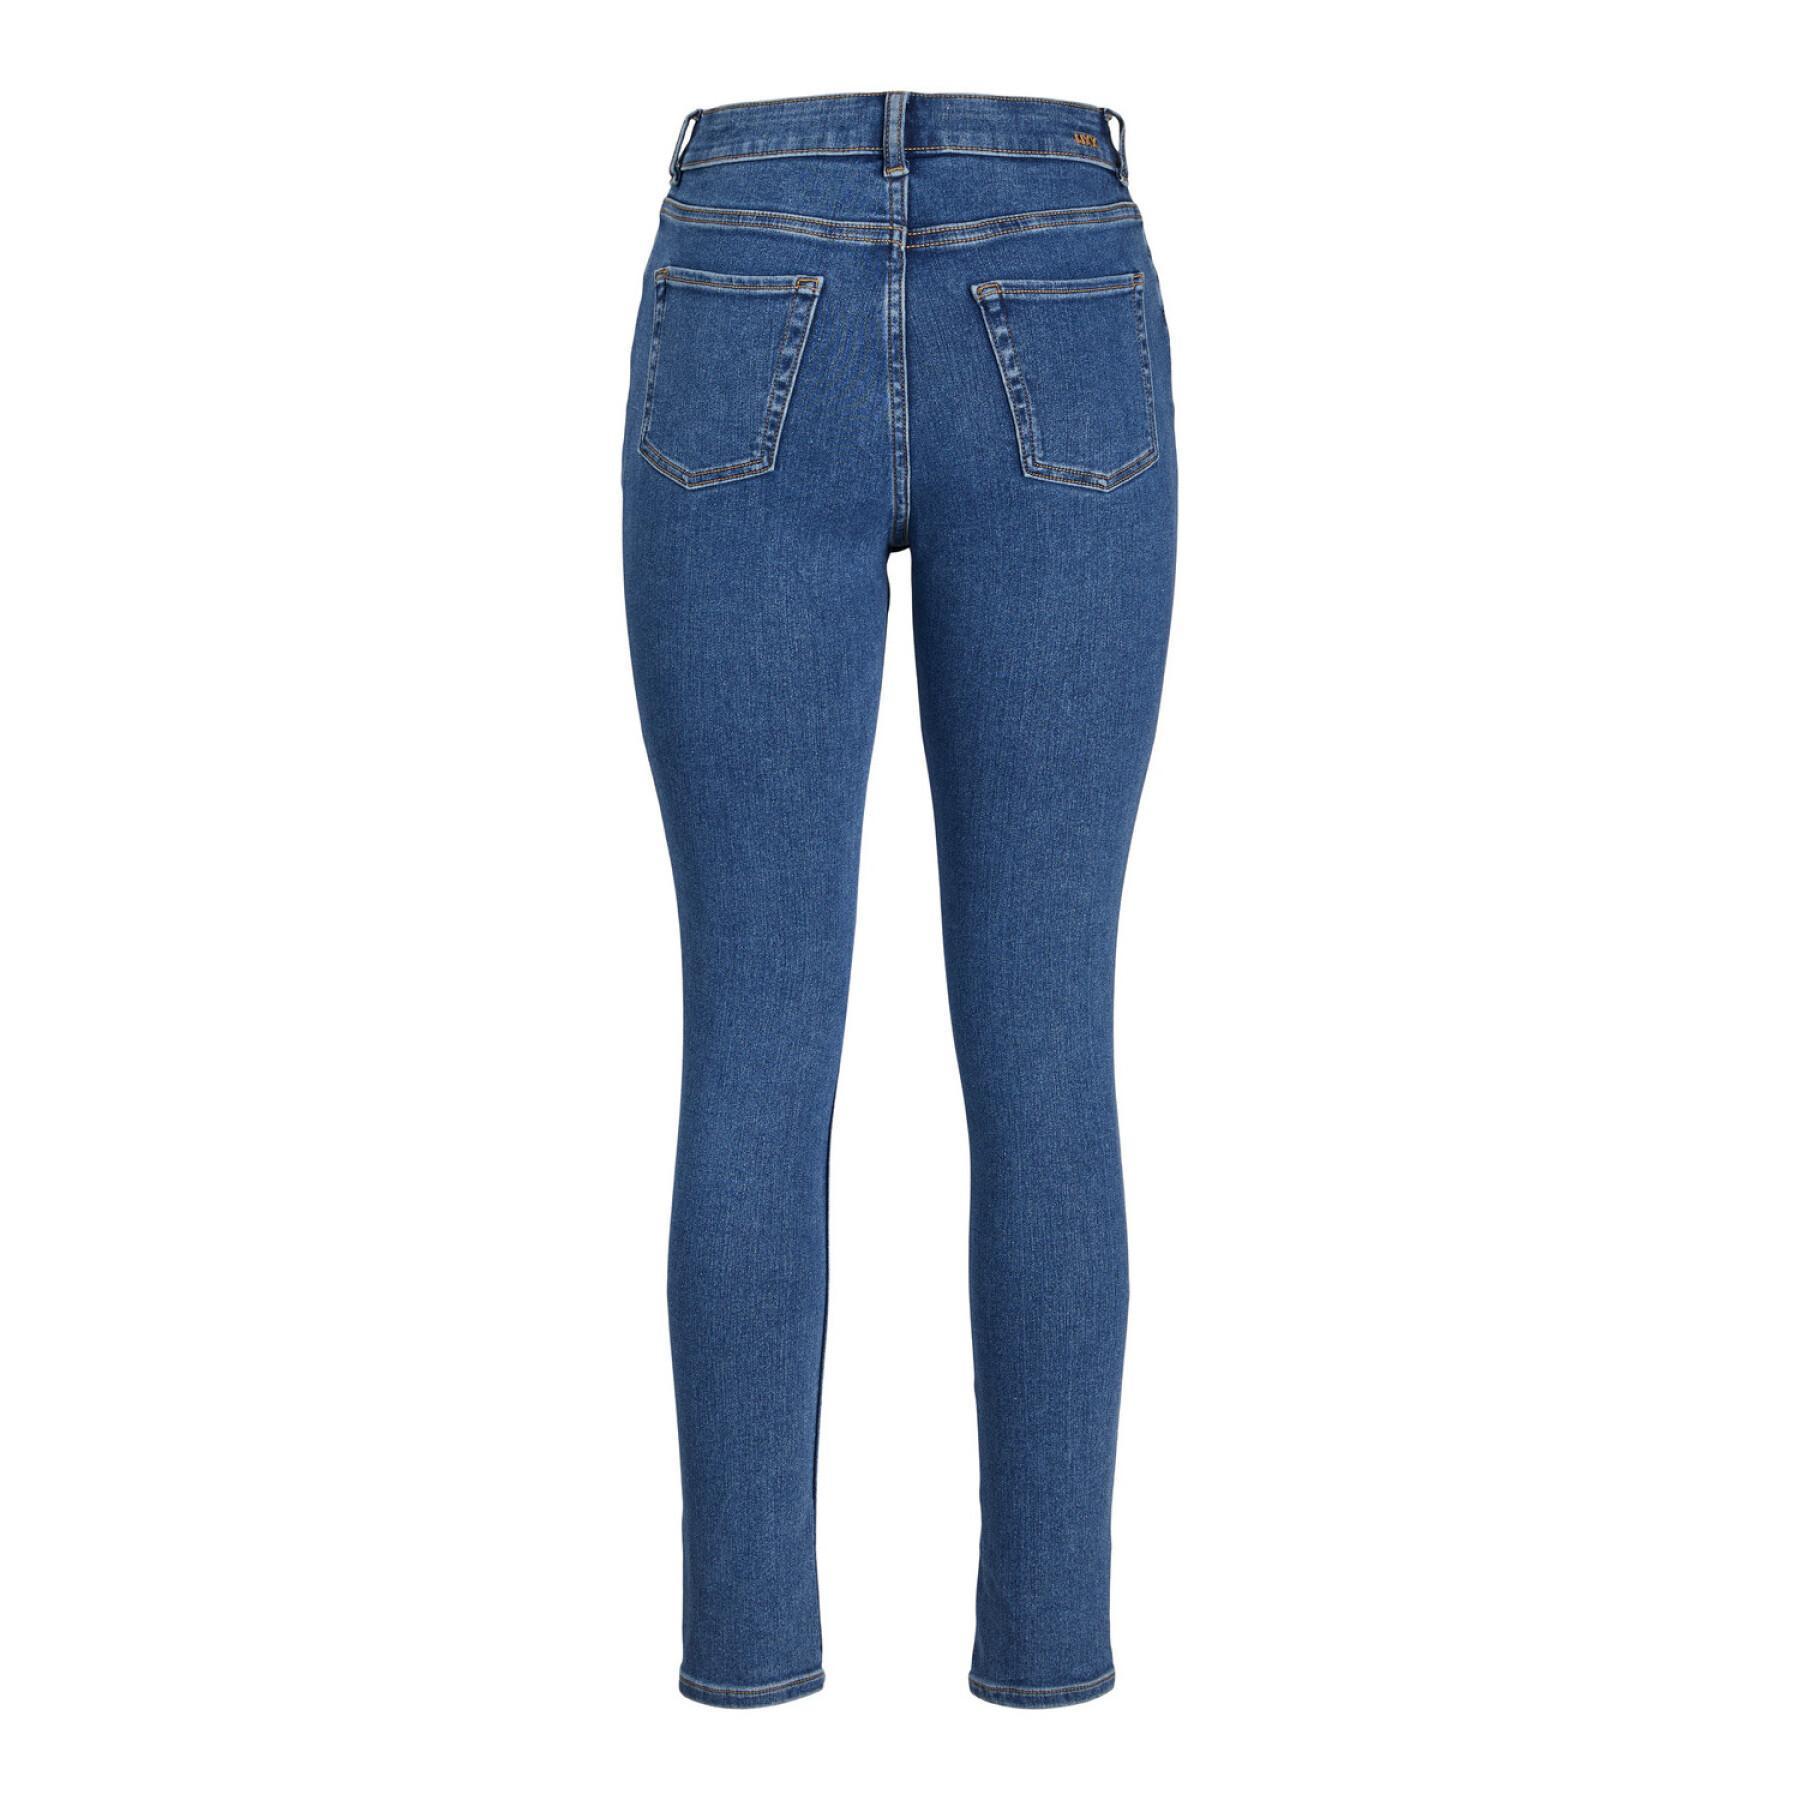 Women's jeans JJXX Jxvienna